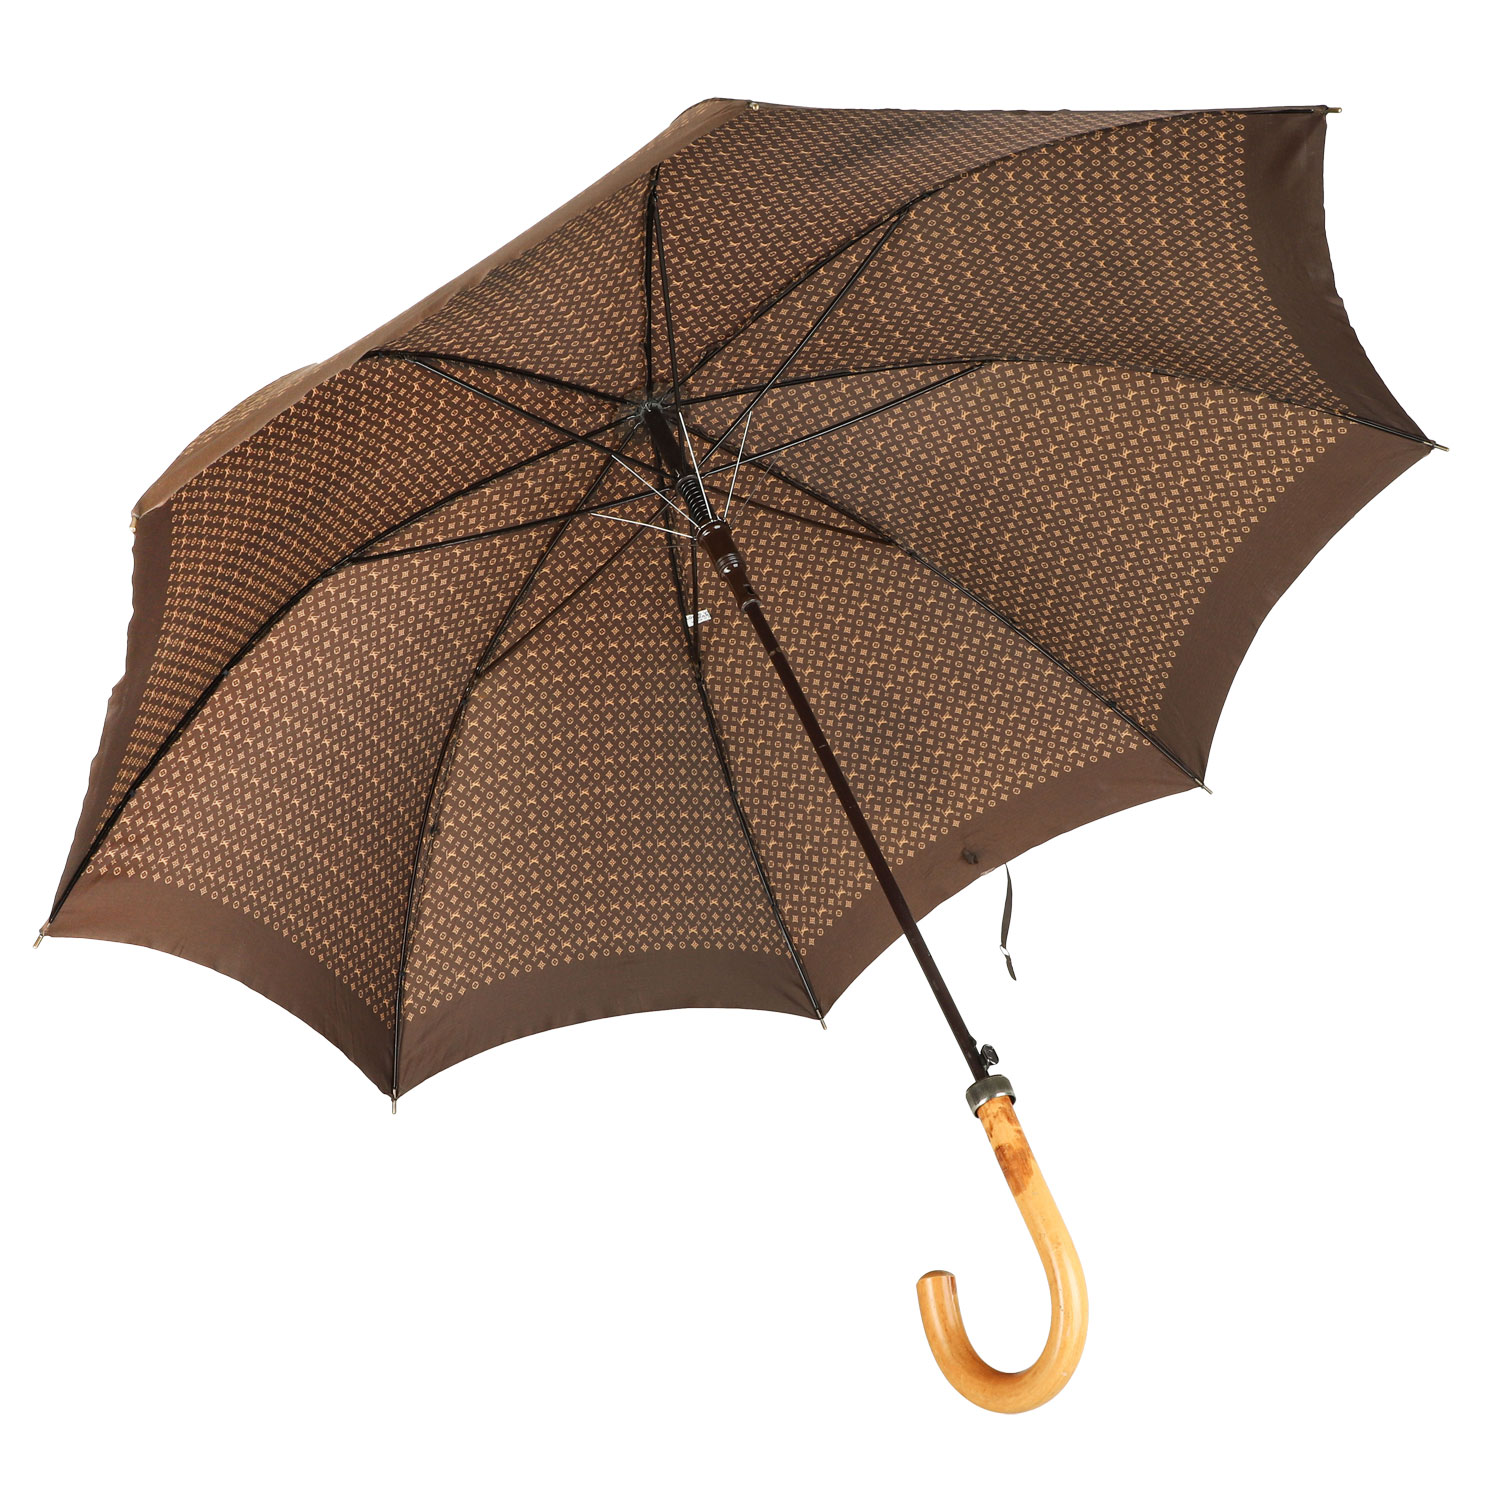 LOUIS VUITTON VINTAGE Regenschirm "PARAPLUIE MONOGRAM", Wohl 80er Jahre. - Image 3 of 4